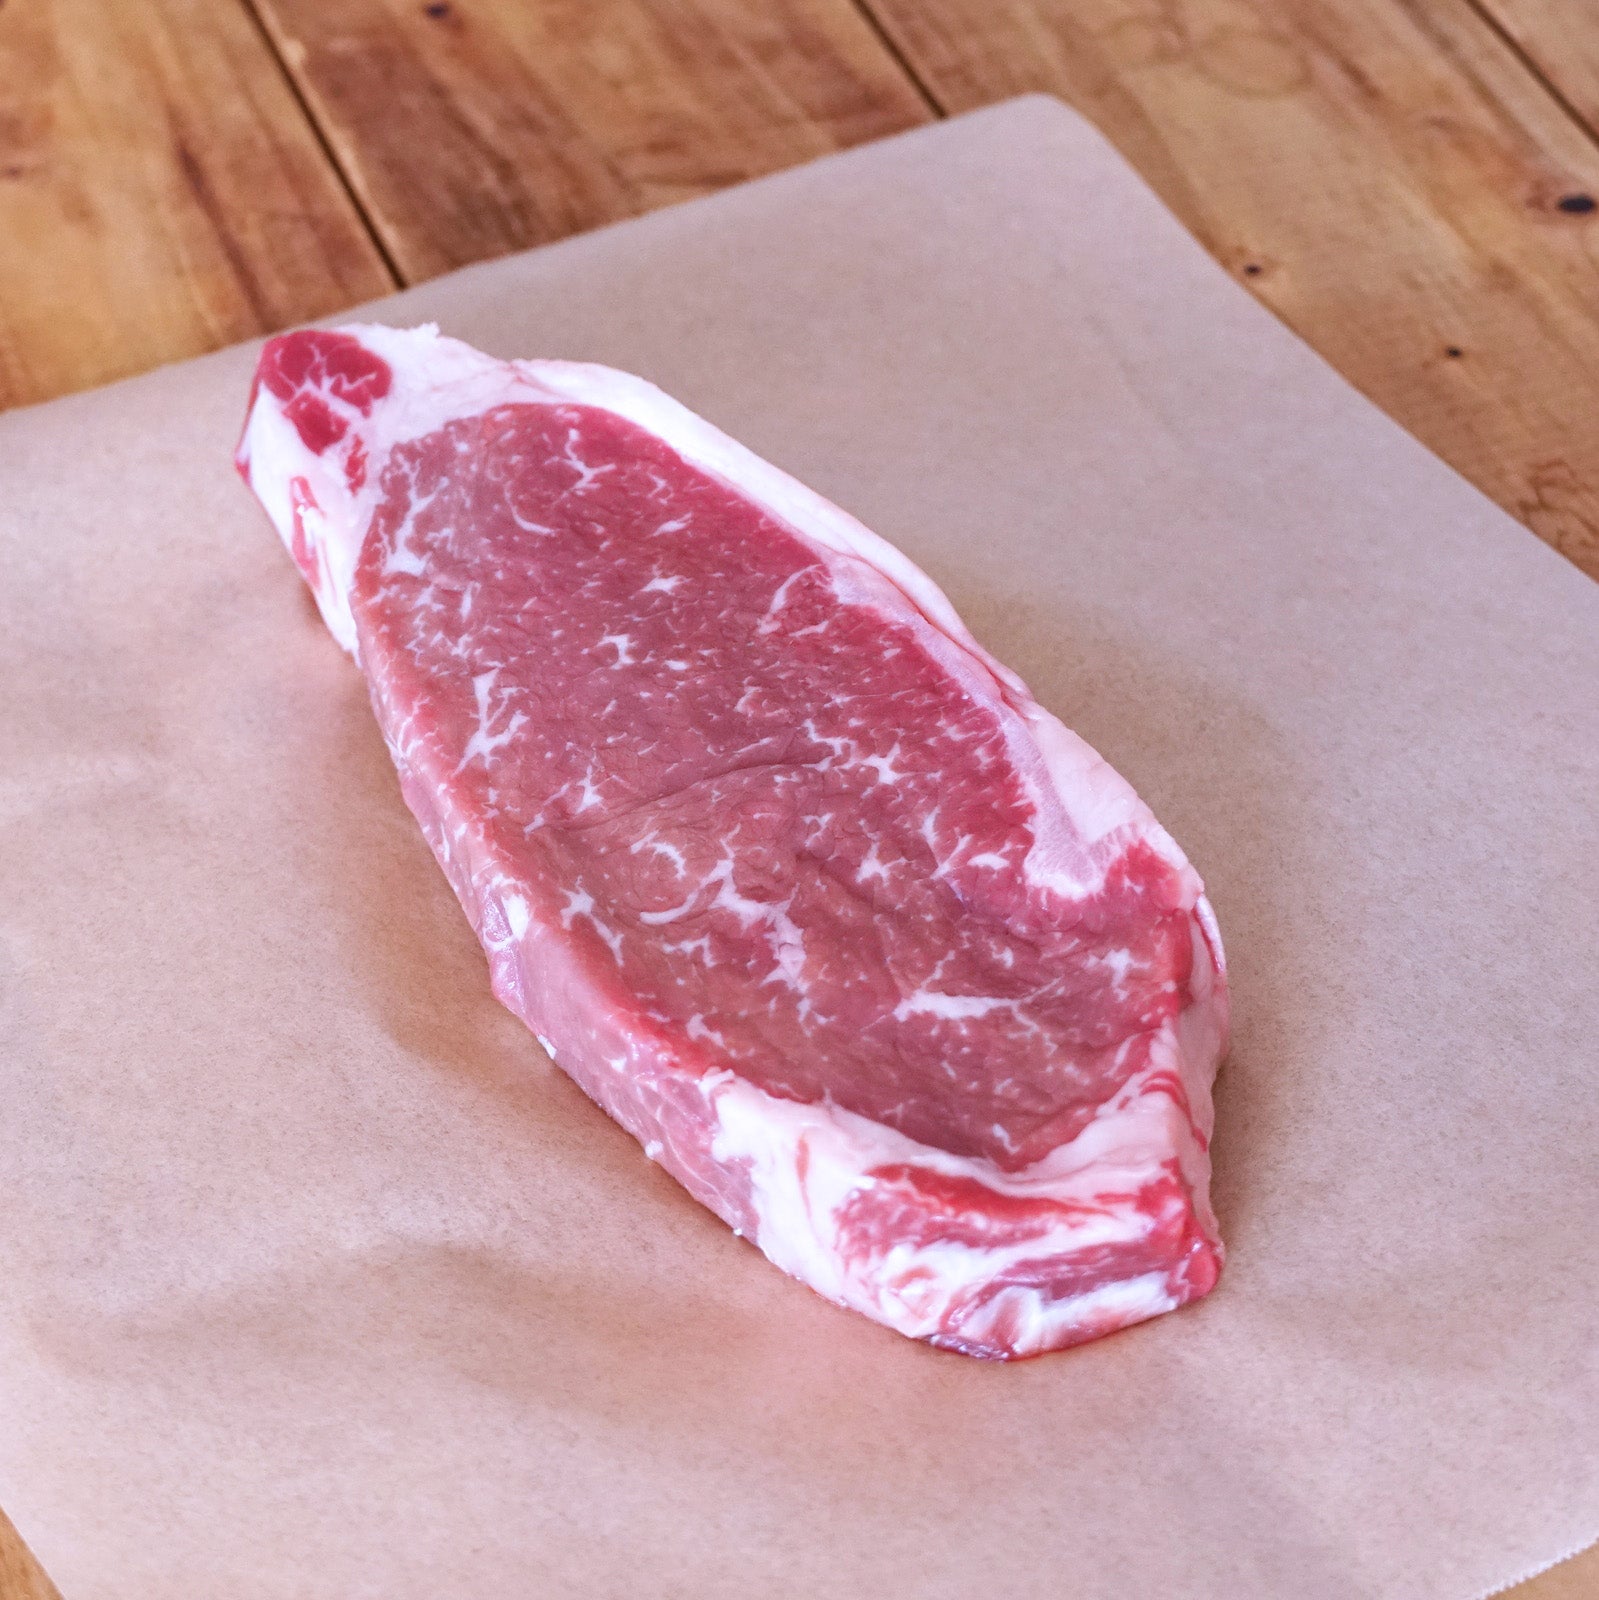 Curated Set of Premium Grain-Fed Beef MB5+ Steaks (3 Types, 9 Steaks, 2.4kg) - Horizon Farms